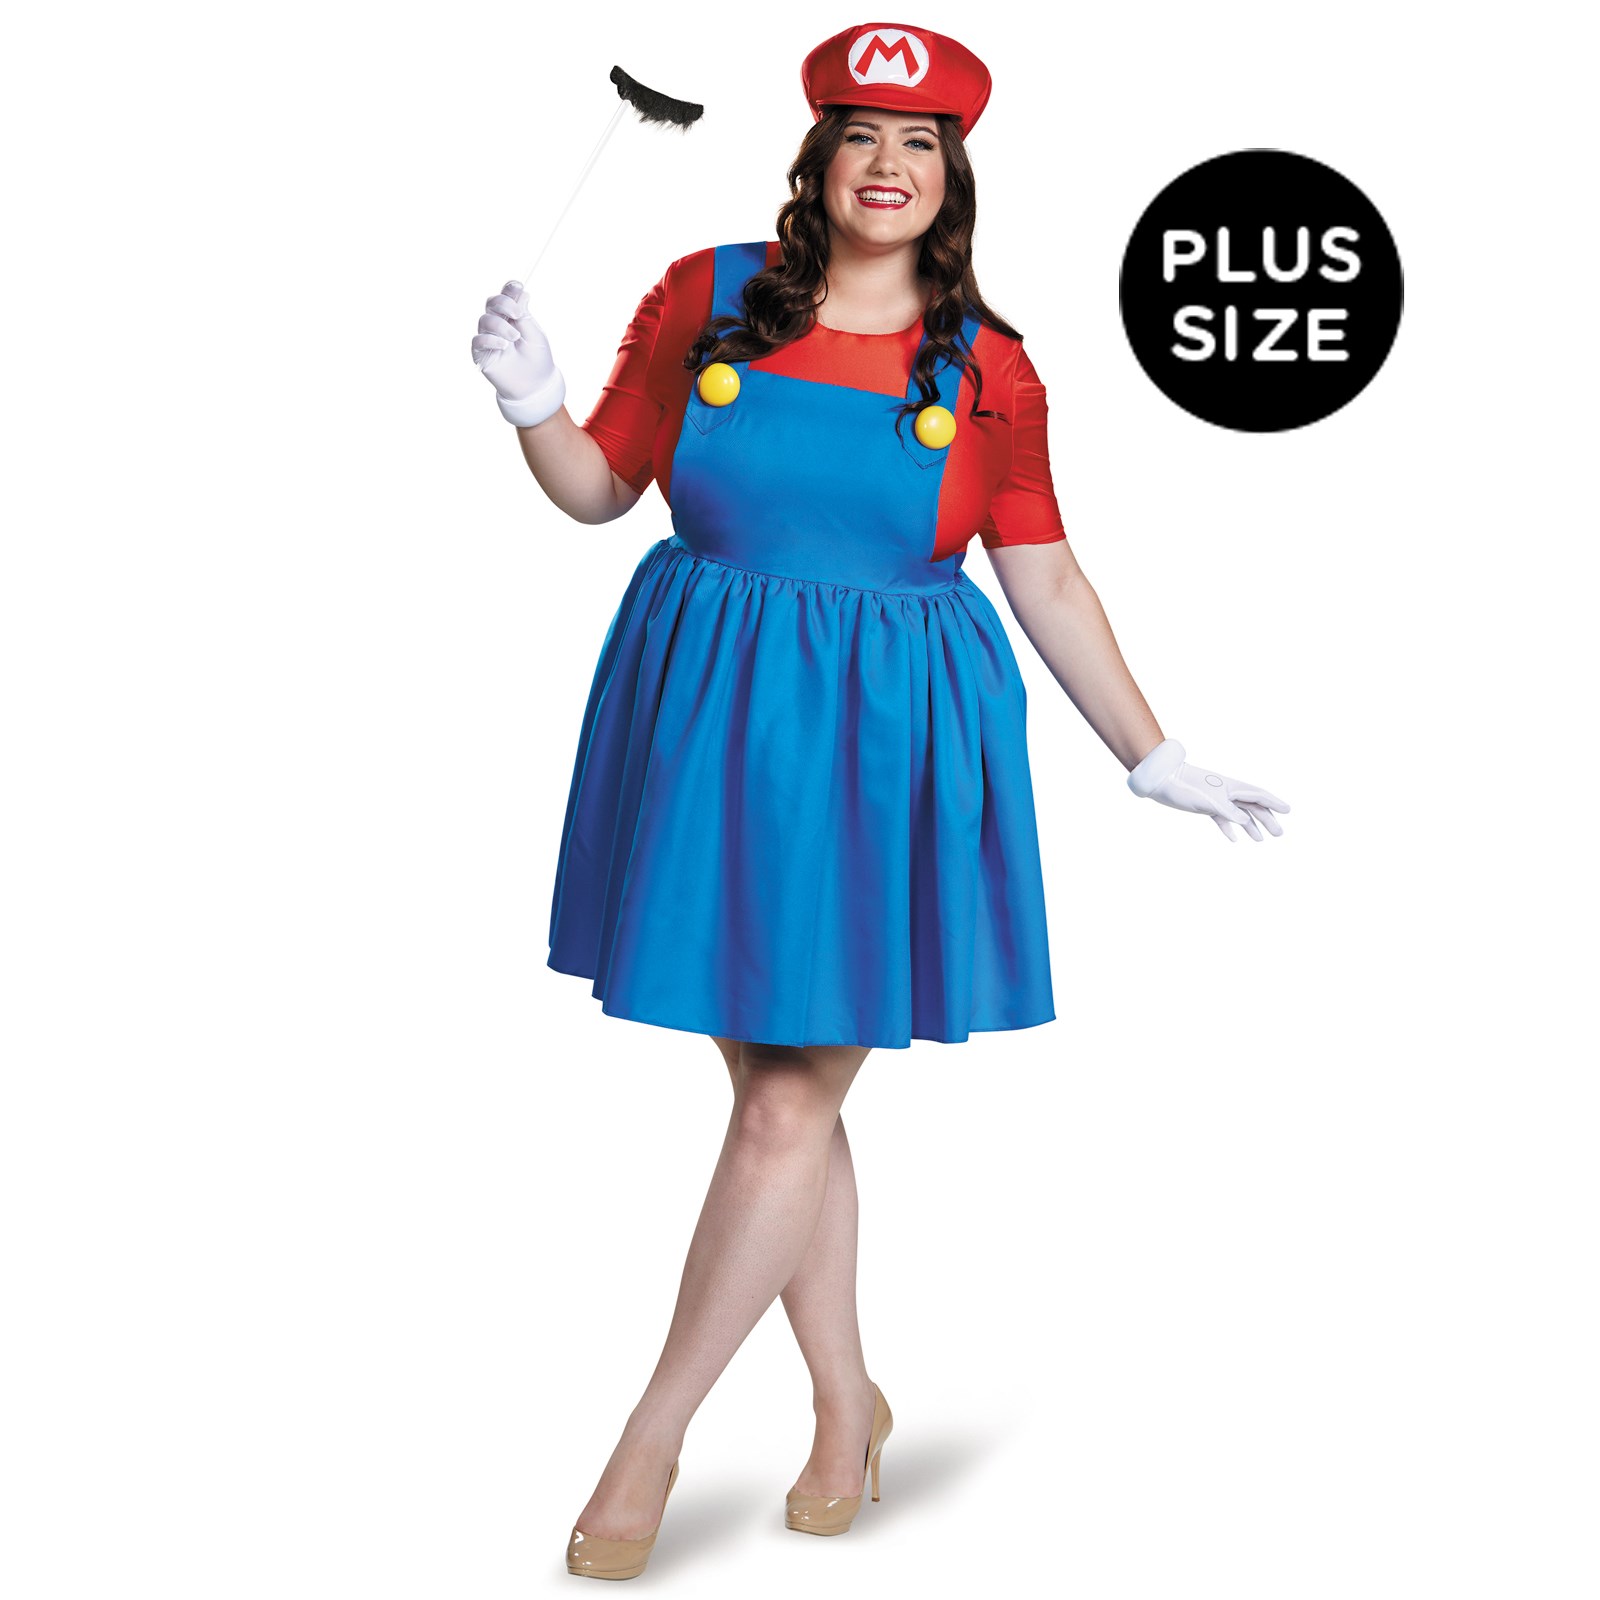 Super Mario: Plus Size Mario Costume w/Skirt For Women